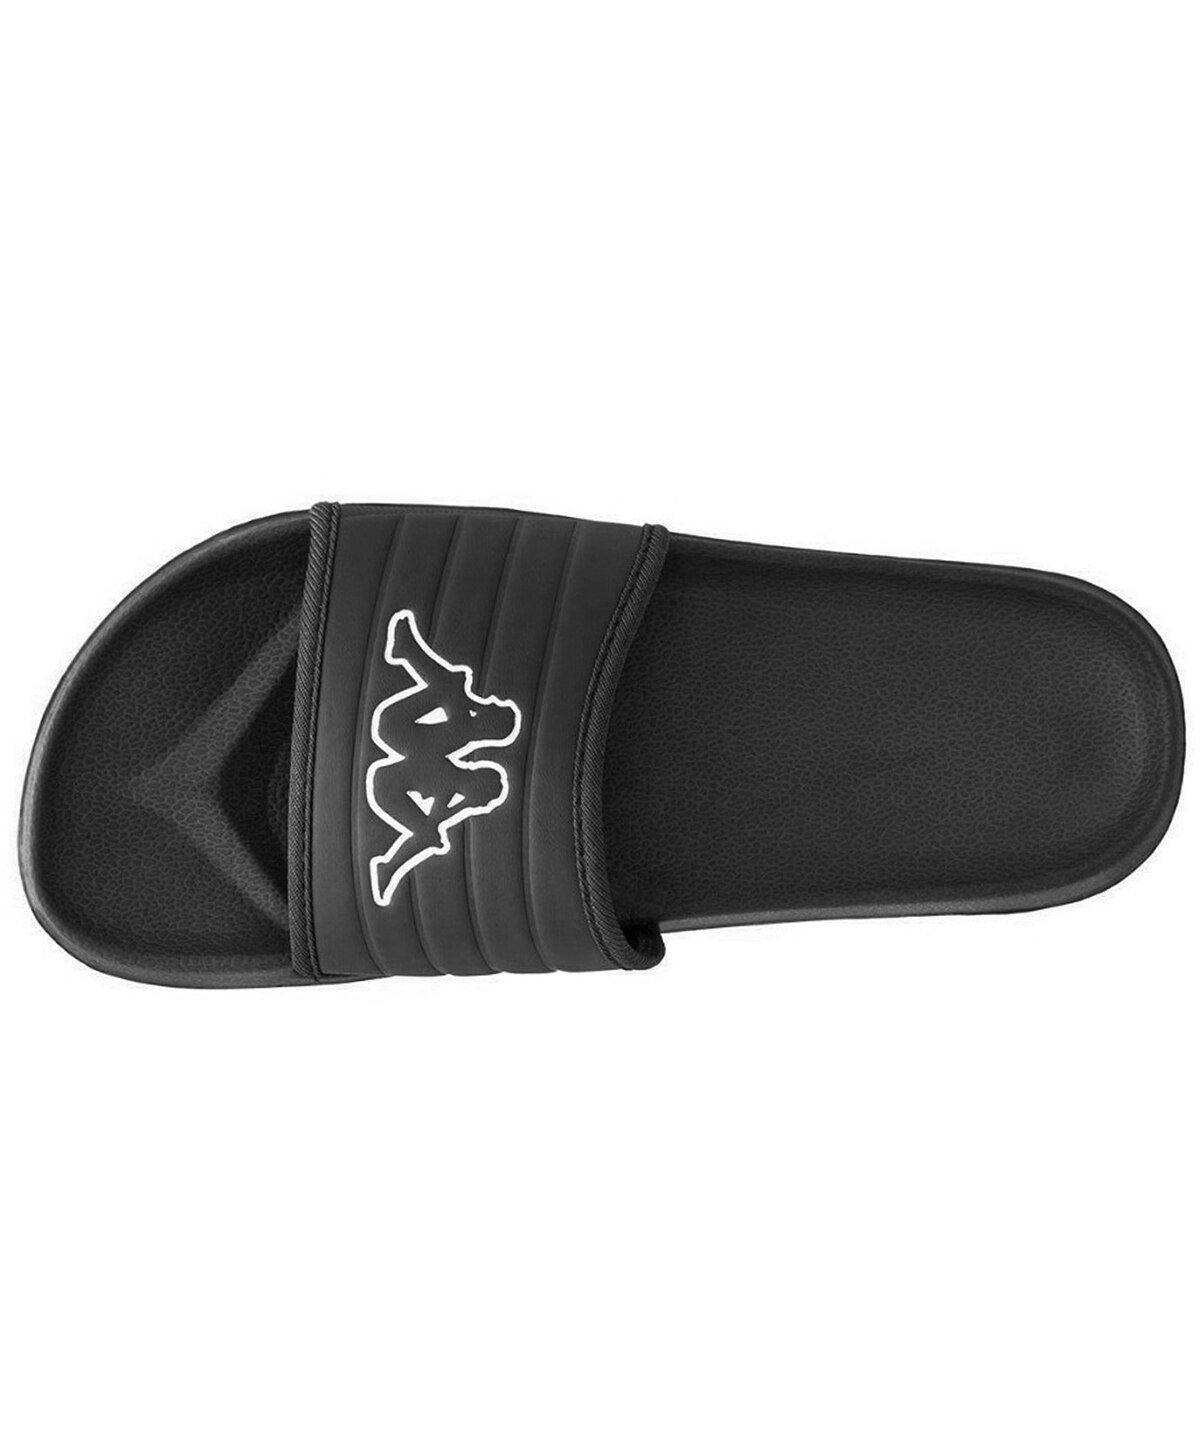 Kappa Lablo slippers